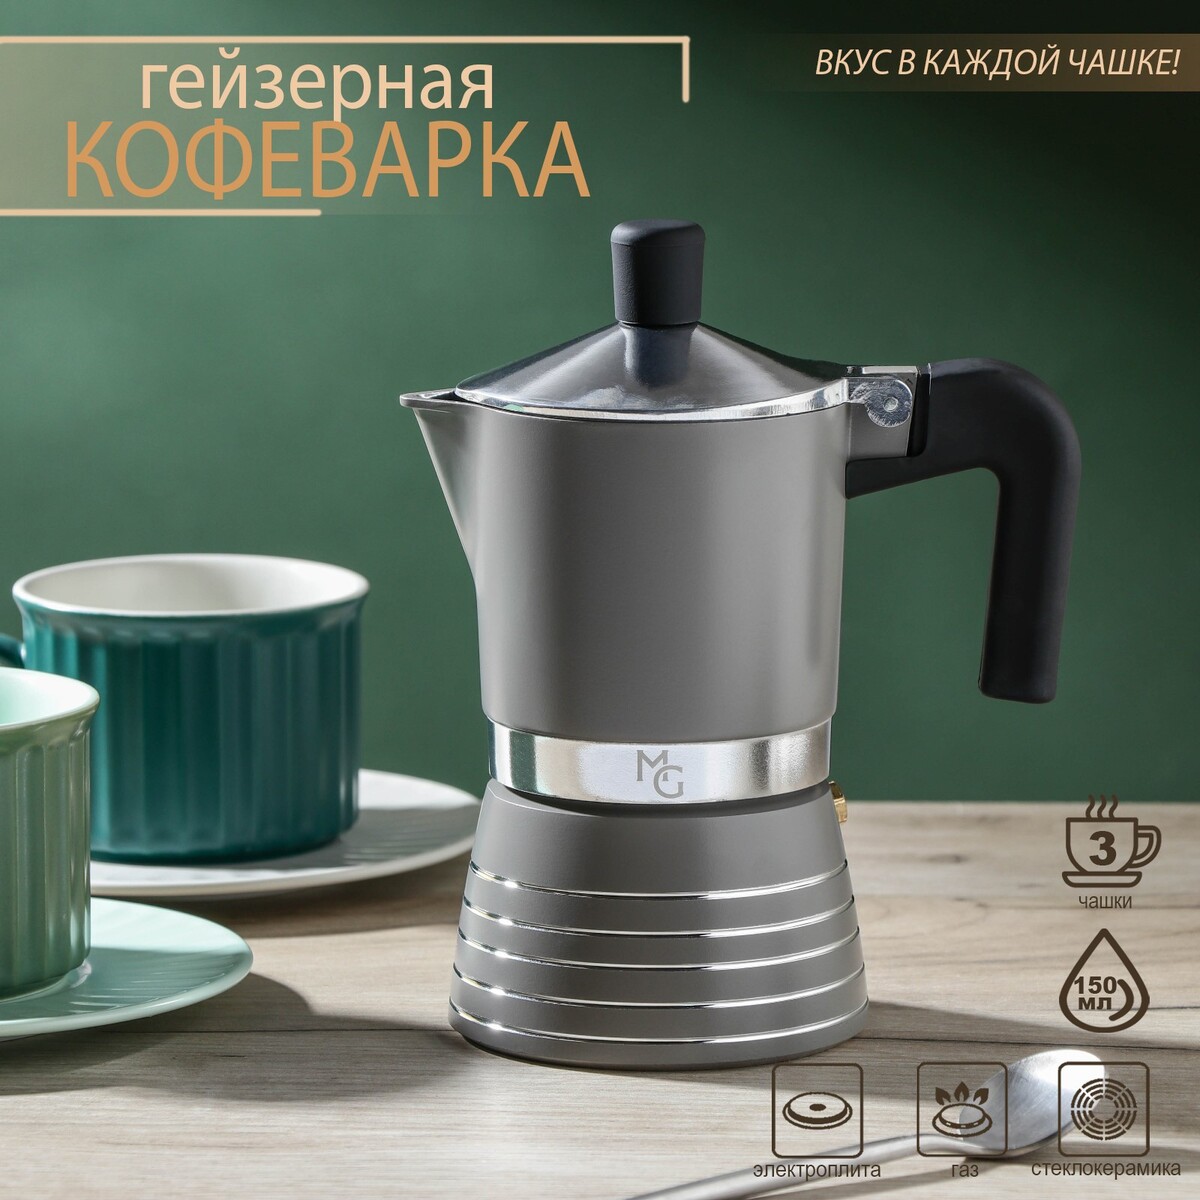 Кофеварка гейзерная magistro moka, на 3 чашки, 150 мл кофеварка гейзерная magistro alum black на 3 чашки 150 мл